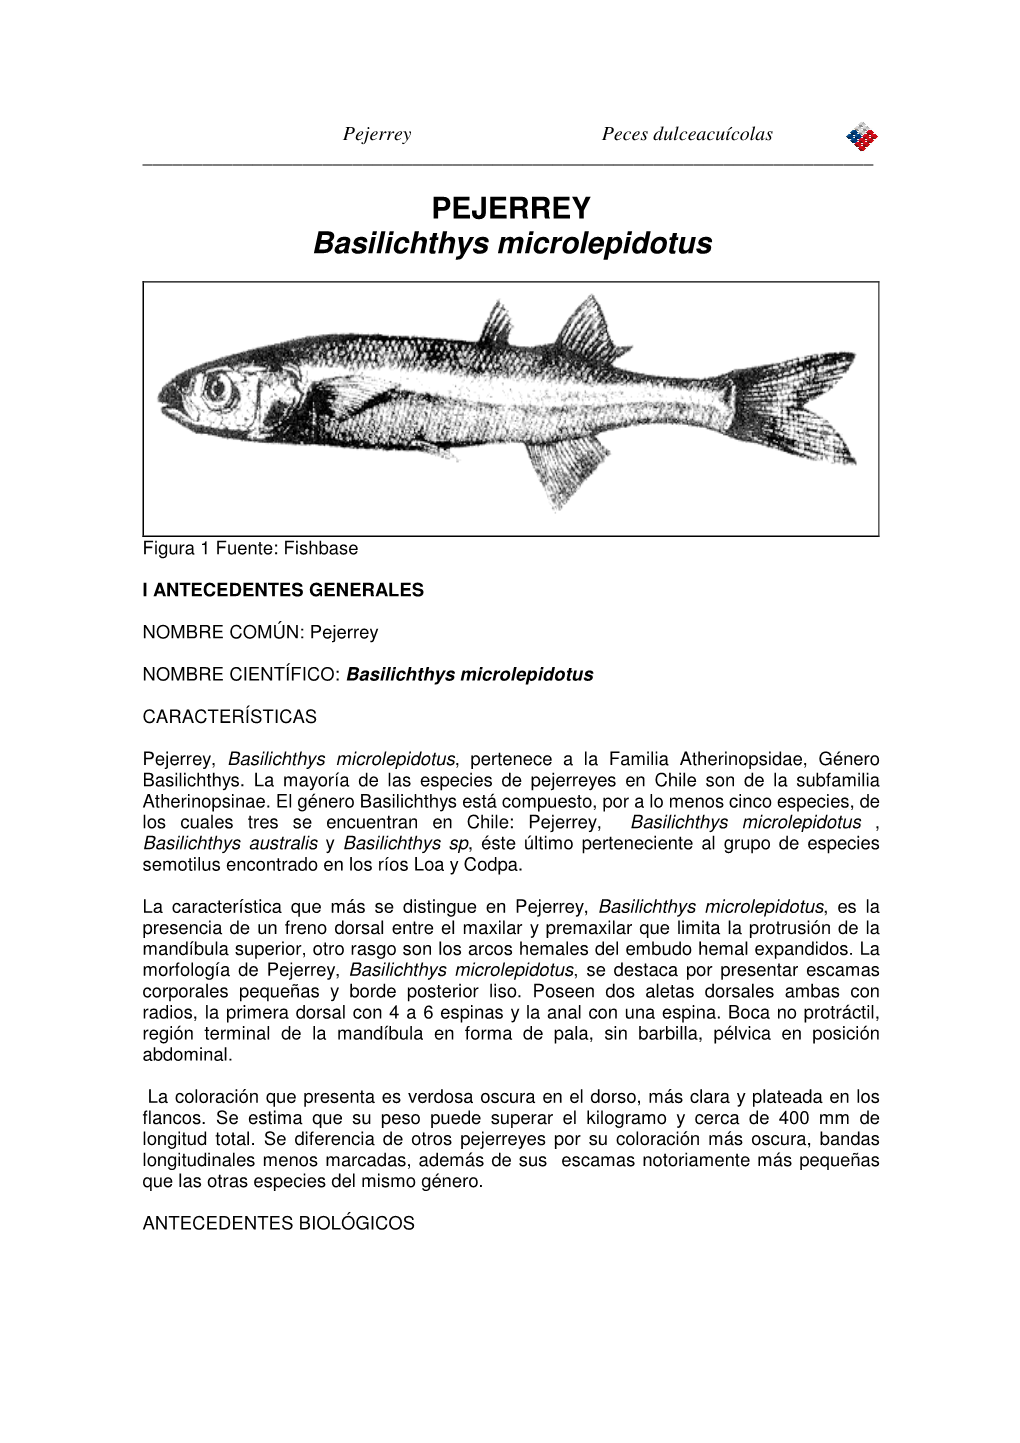 PEJERREY Basilichthys Microlepidotus